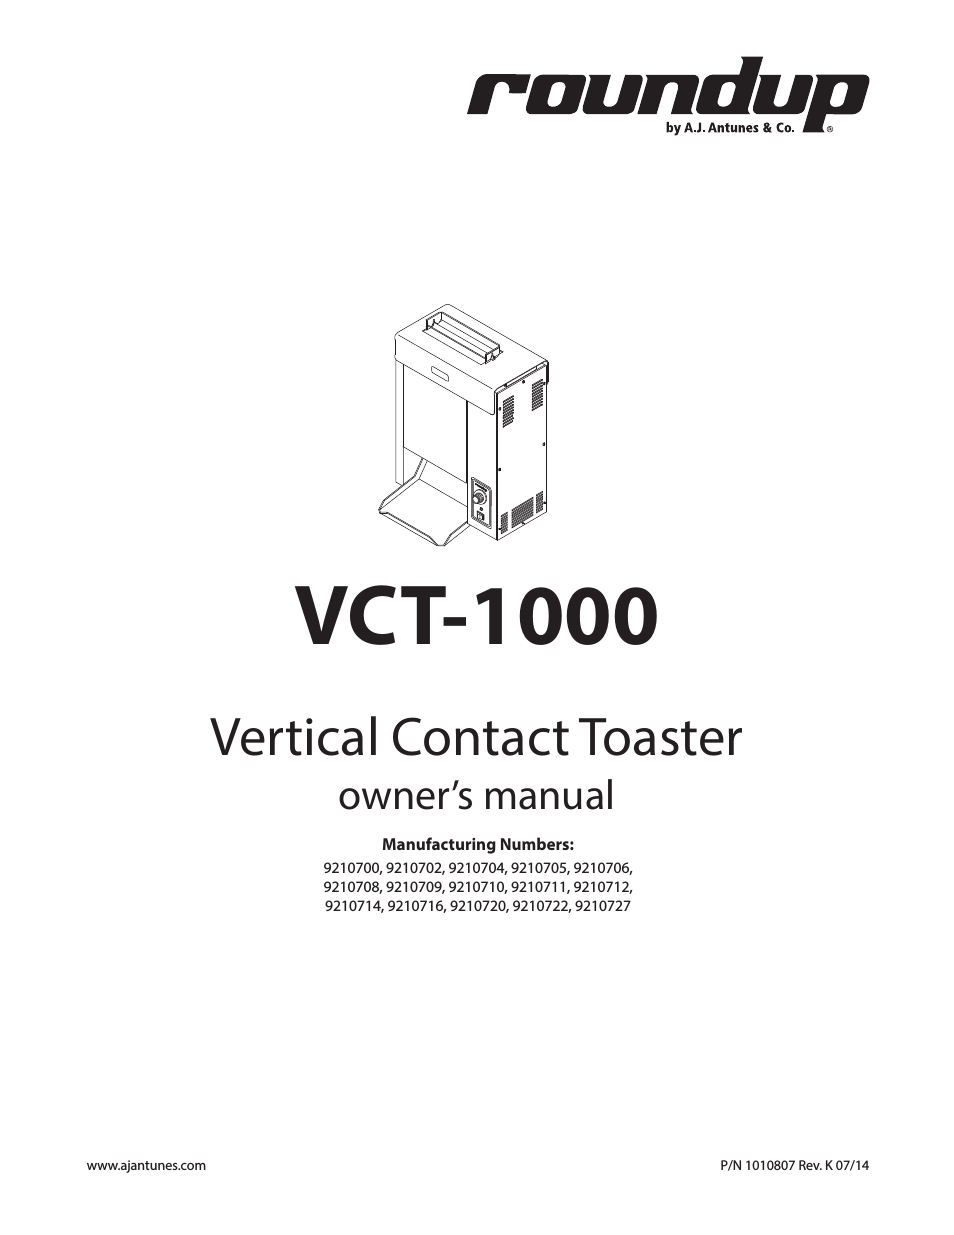 VCT-1000 9210709